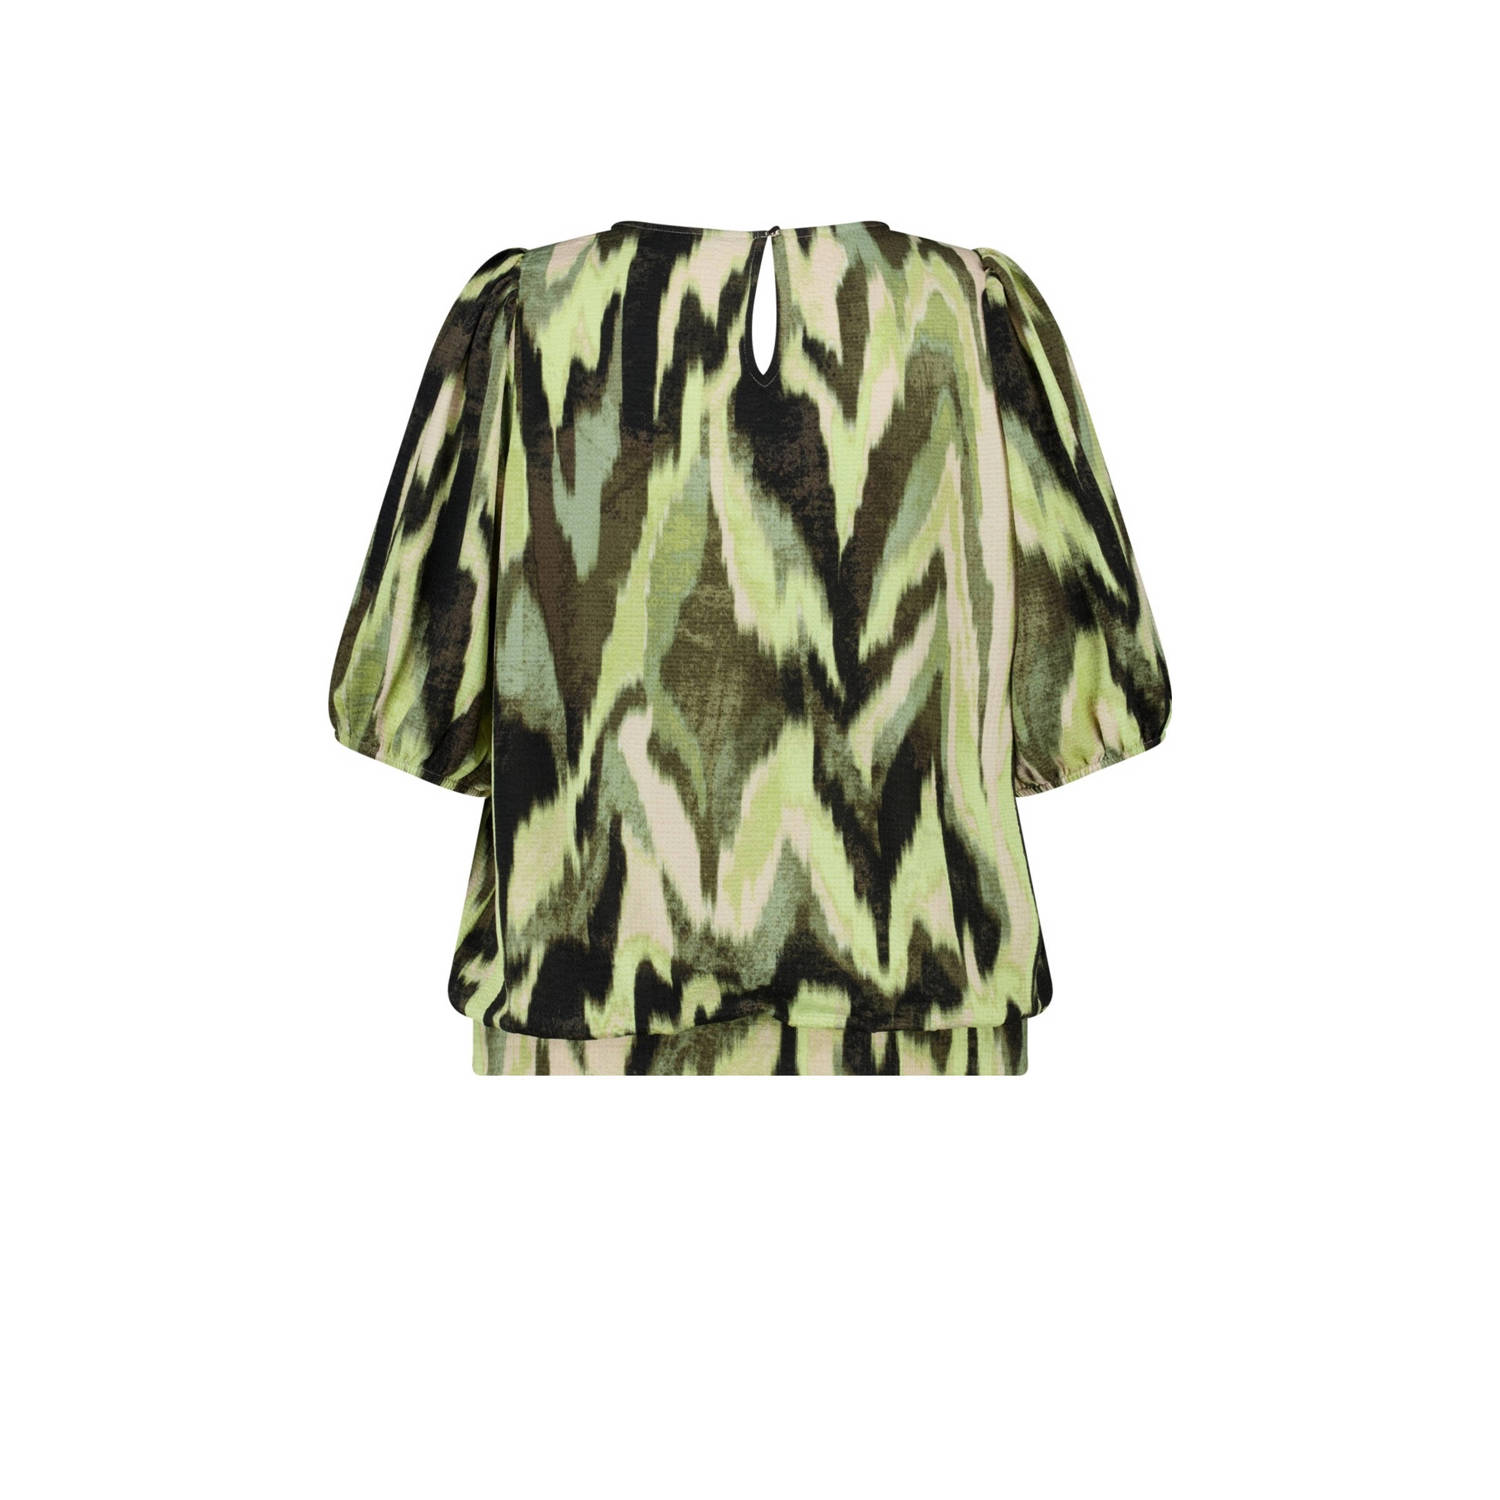 MS Mode blousetop met all over print en open detail groen multi